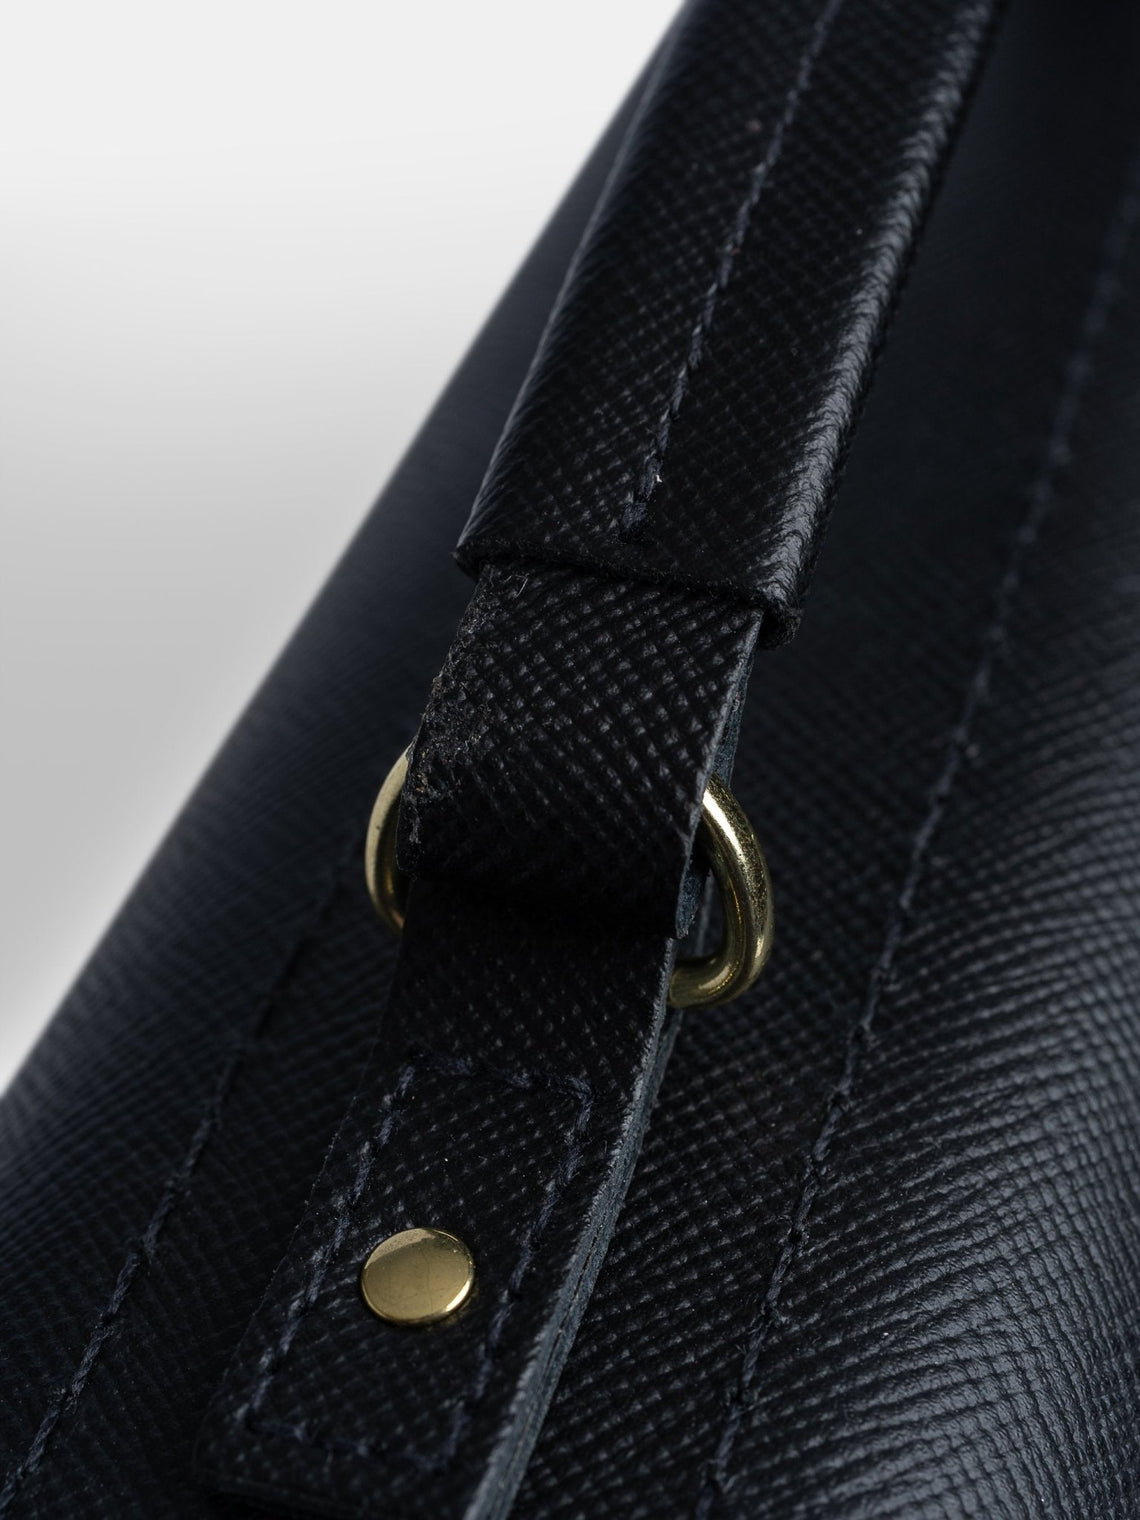 The Cambridge Satchel Company Unisex Leather Black Briefcase - Black